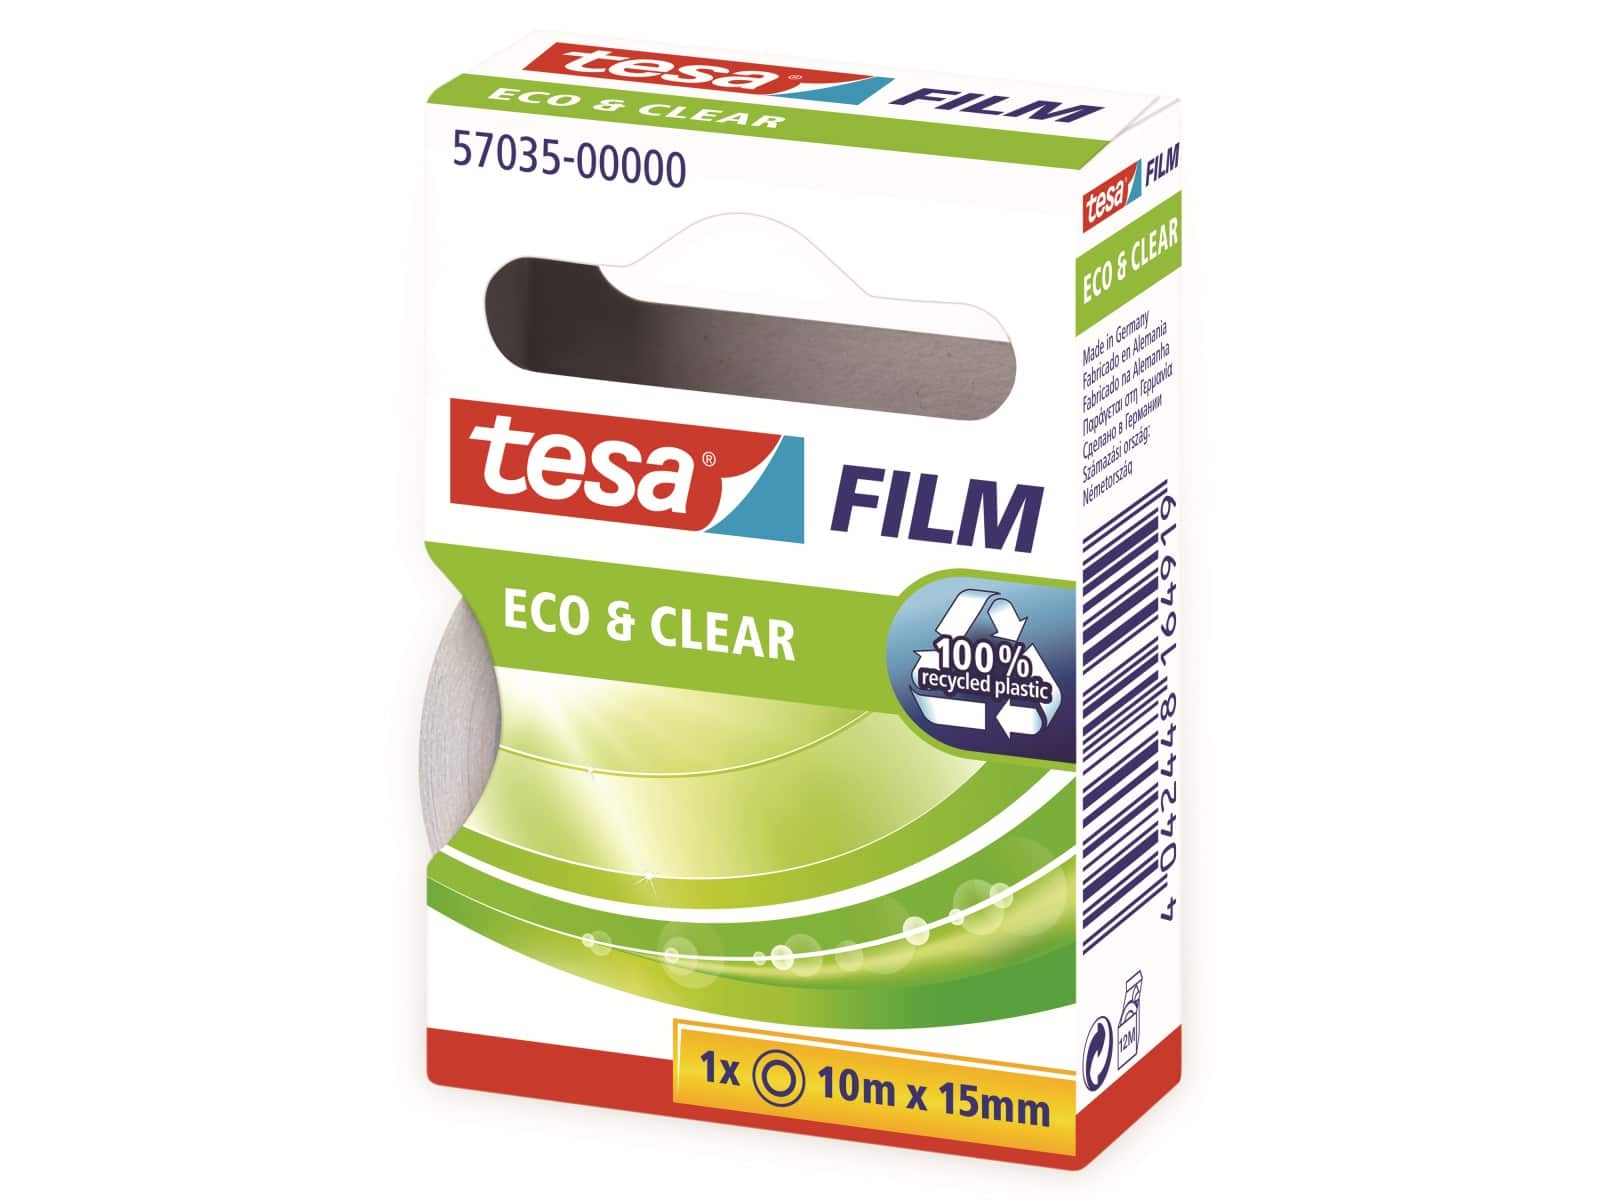 TESA film® eco&clear, 1 Rolle, 10m:15mm, 57035-00000-01